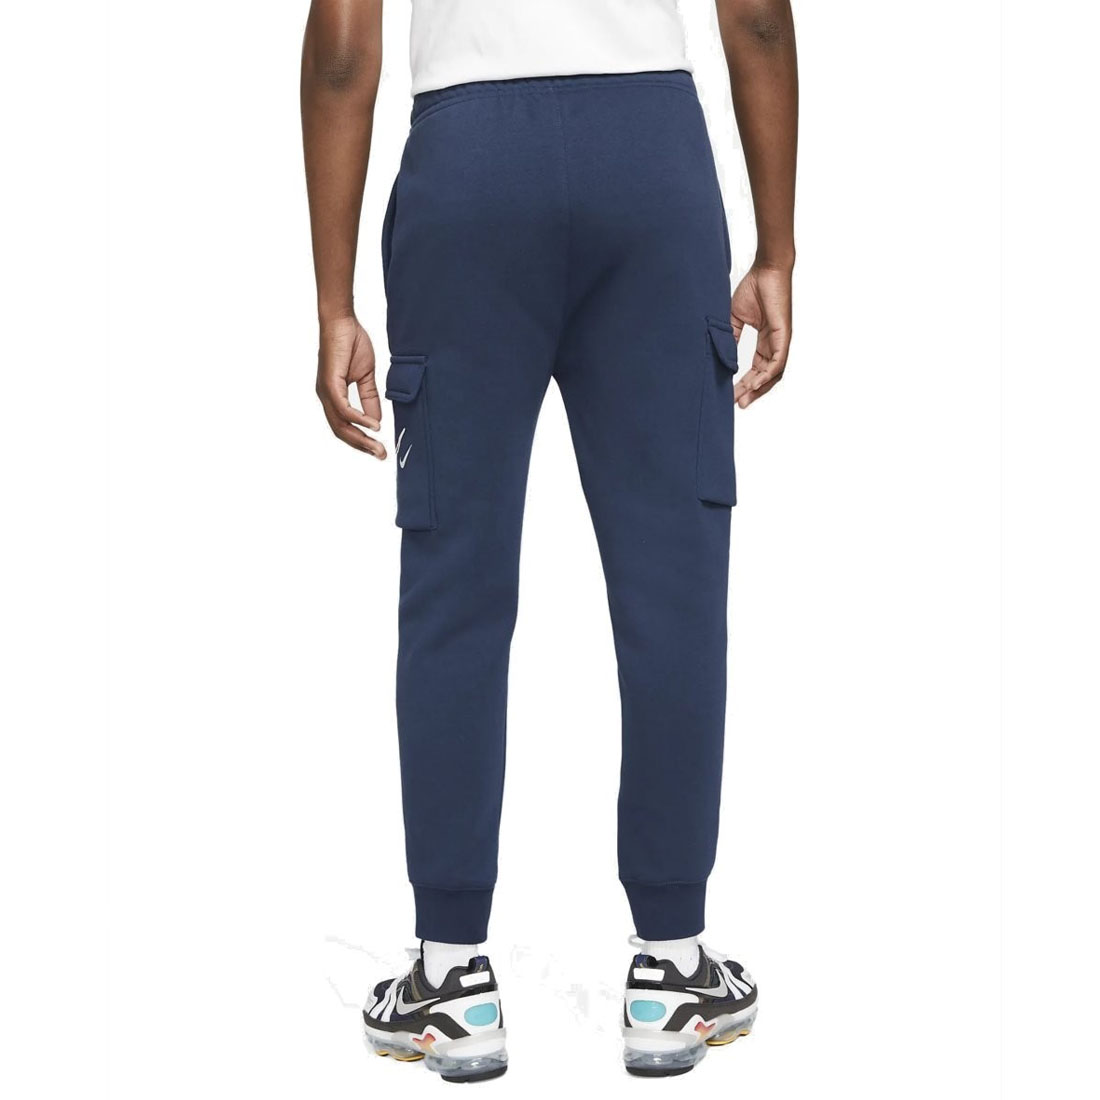 Nike Sportswear Multi Swoosh Mens Graphic Fleece Tracksuit – Exclusive ...